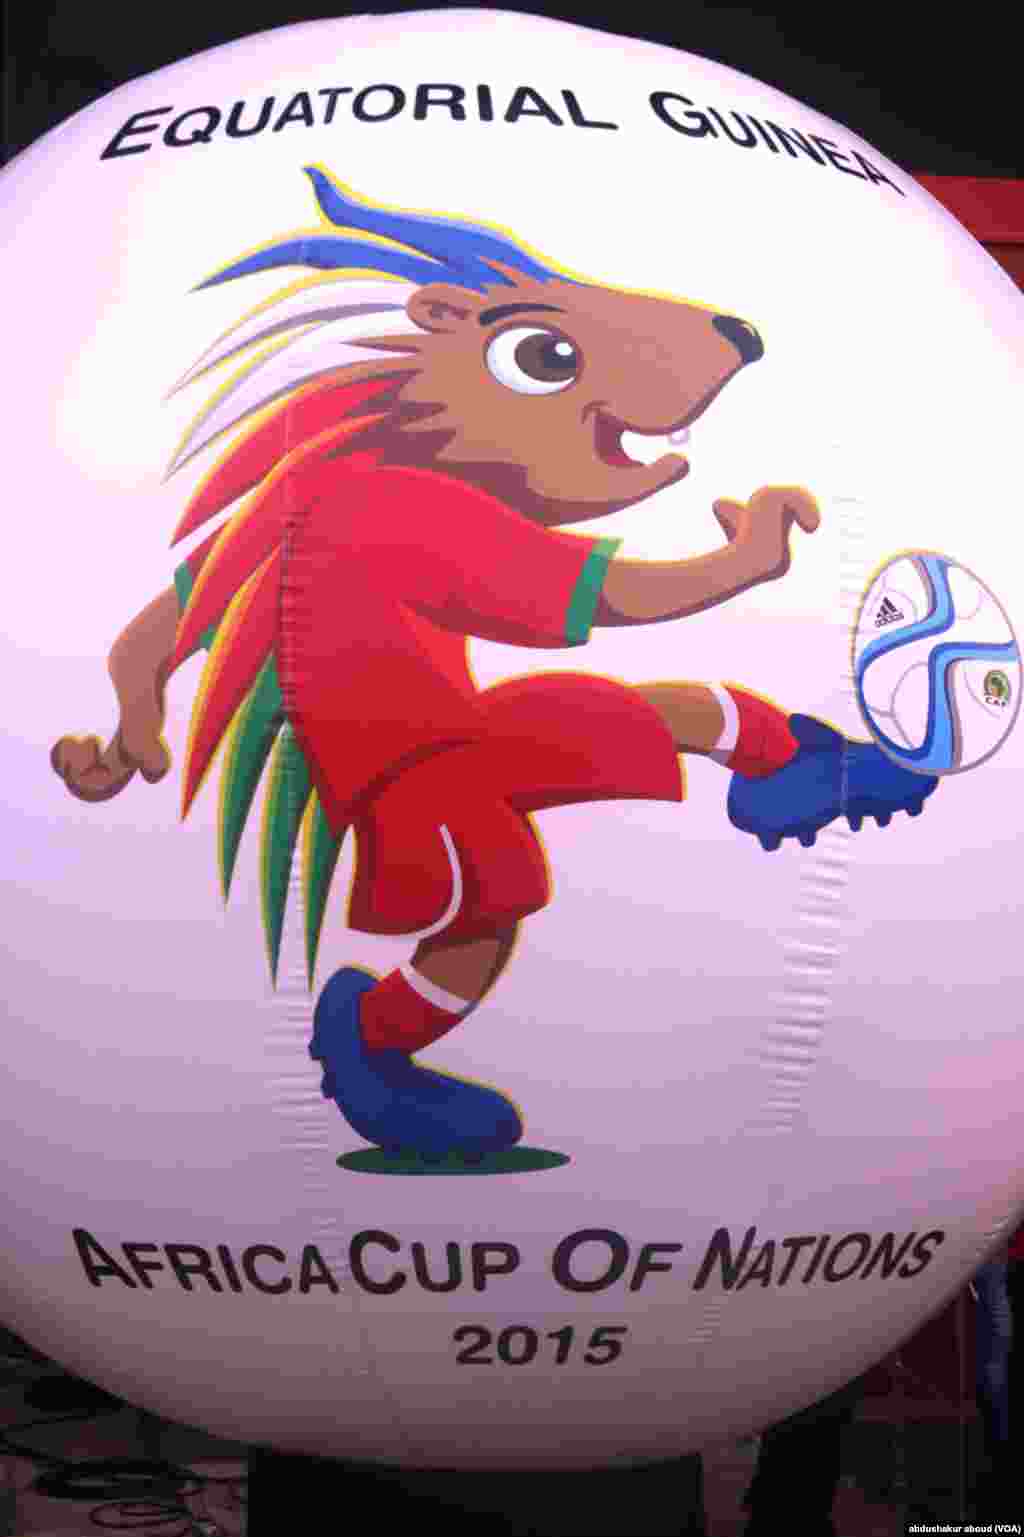 Nembo ya micnhuano ya CAN 2015 Equatortial Guinea, Chukchuk